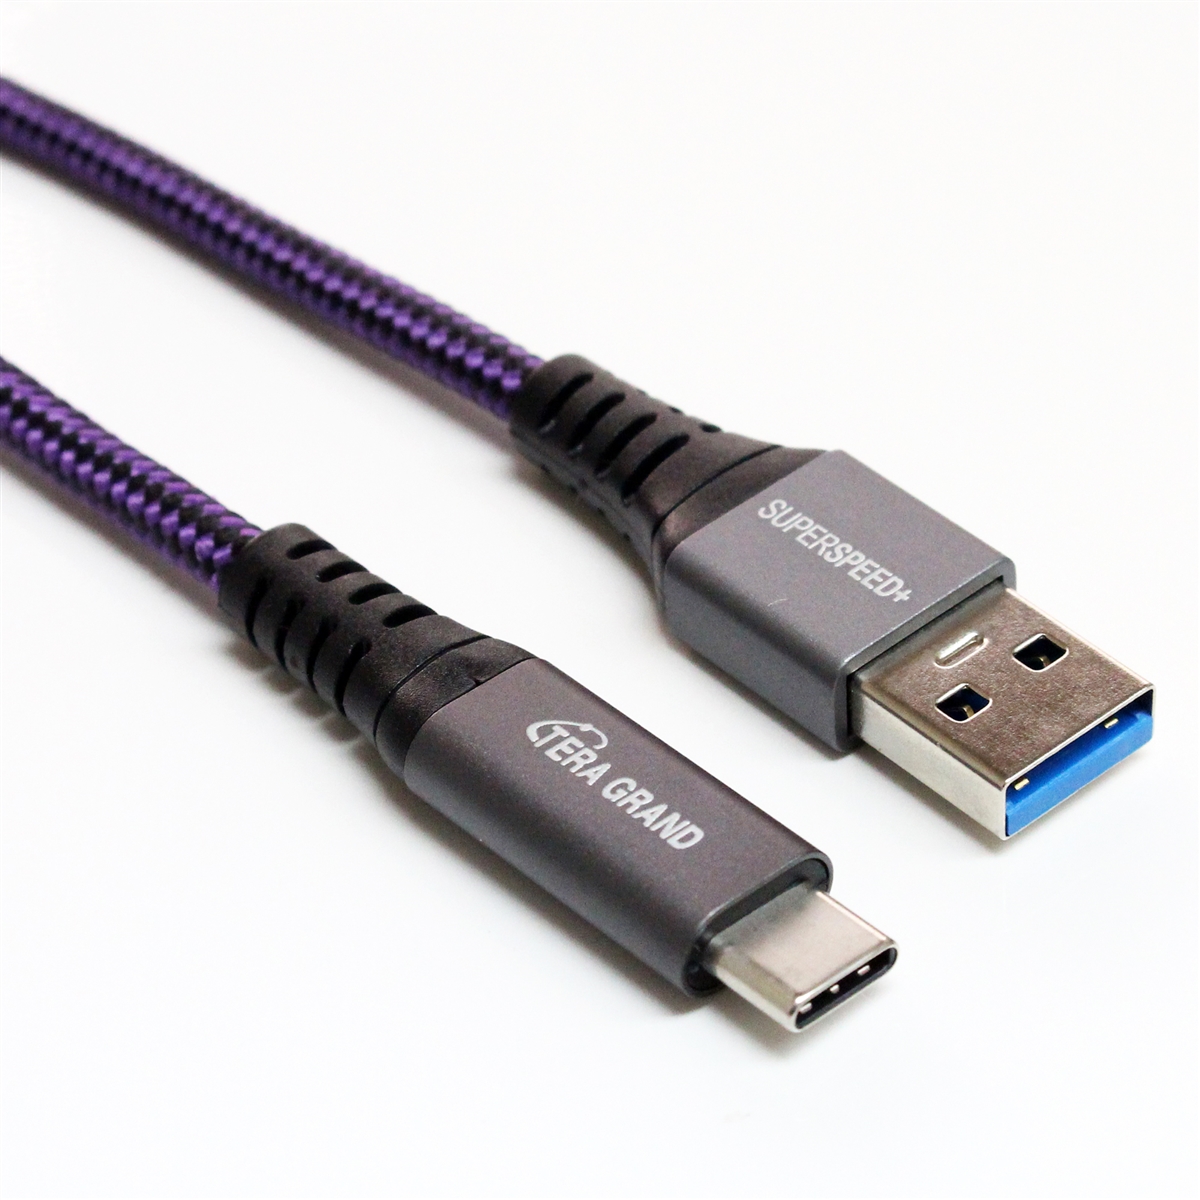 Usb 3.3. Юсб 3.1 Type c. USB 3.2 gen1 Type-a. USB 3.2 gen2 Type-c. USB Type-c кабель USB 3.1.